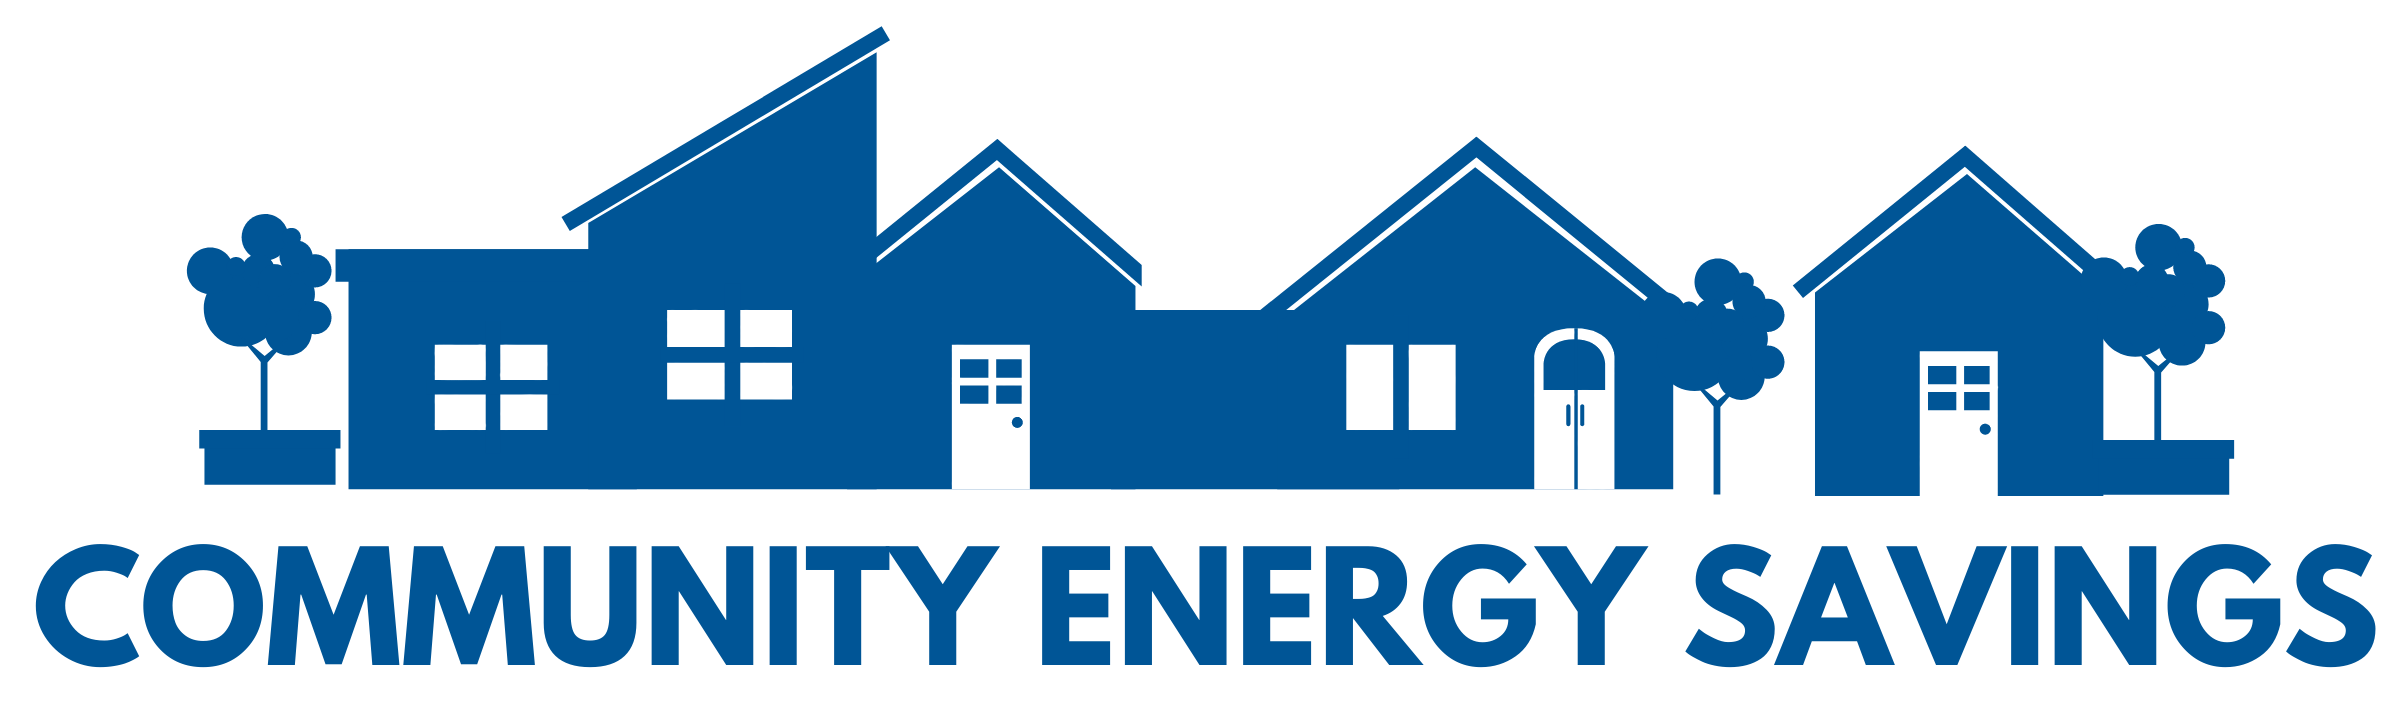 Community Energy Savings logo